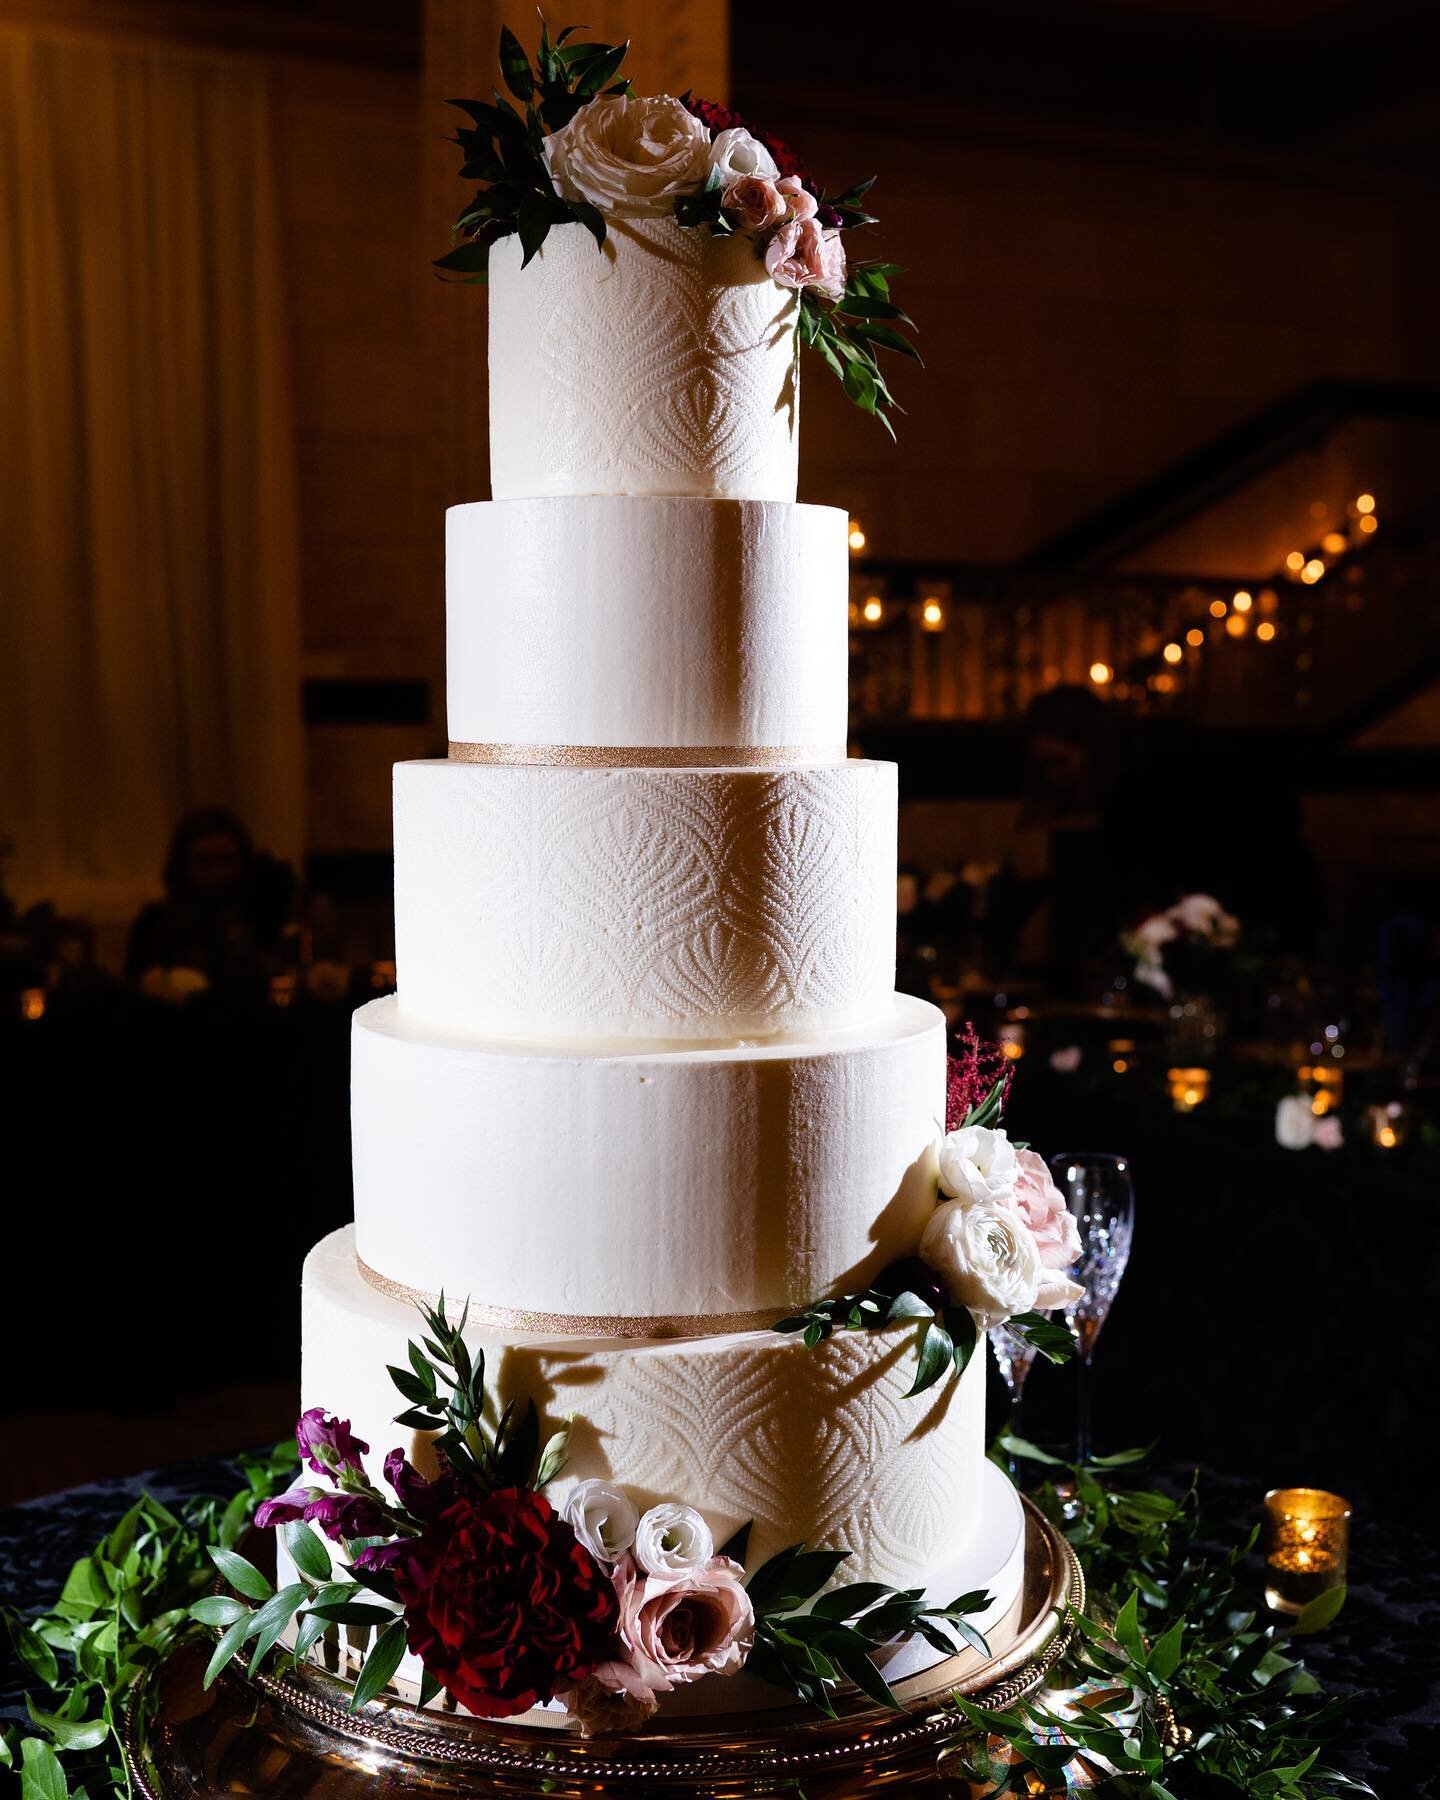 @melissasiglerphoto you captured this so beautifully. ❤️ What a stunning wedding!!!

-
 #buttercreamcake  #cake  #engaged  #realweddings  #edibleart  #bakerlife  #cakery  #kcbakes  #instalove  #instacake  #cakeideas  #weddingplanning  #weddingplanner